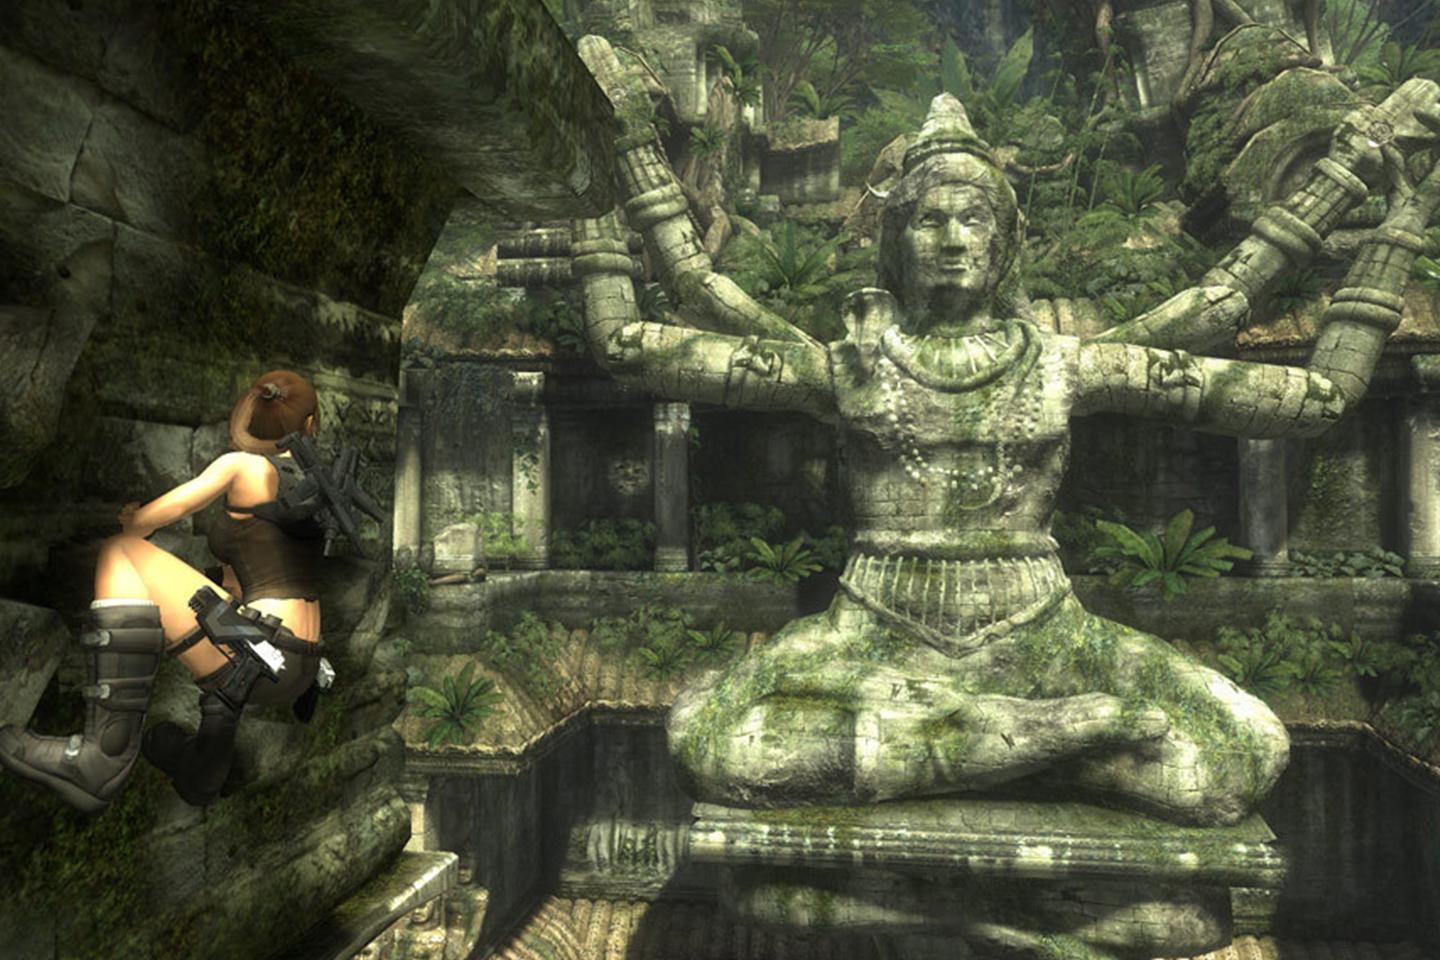 Lara climbing tomb wall near rock sculpture of a four-armed god.